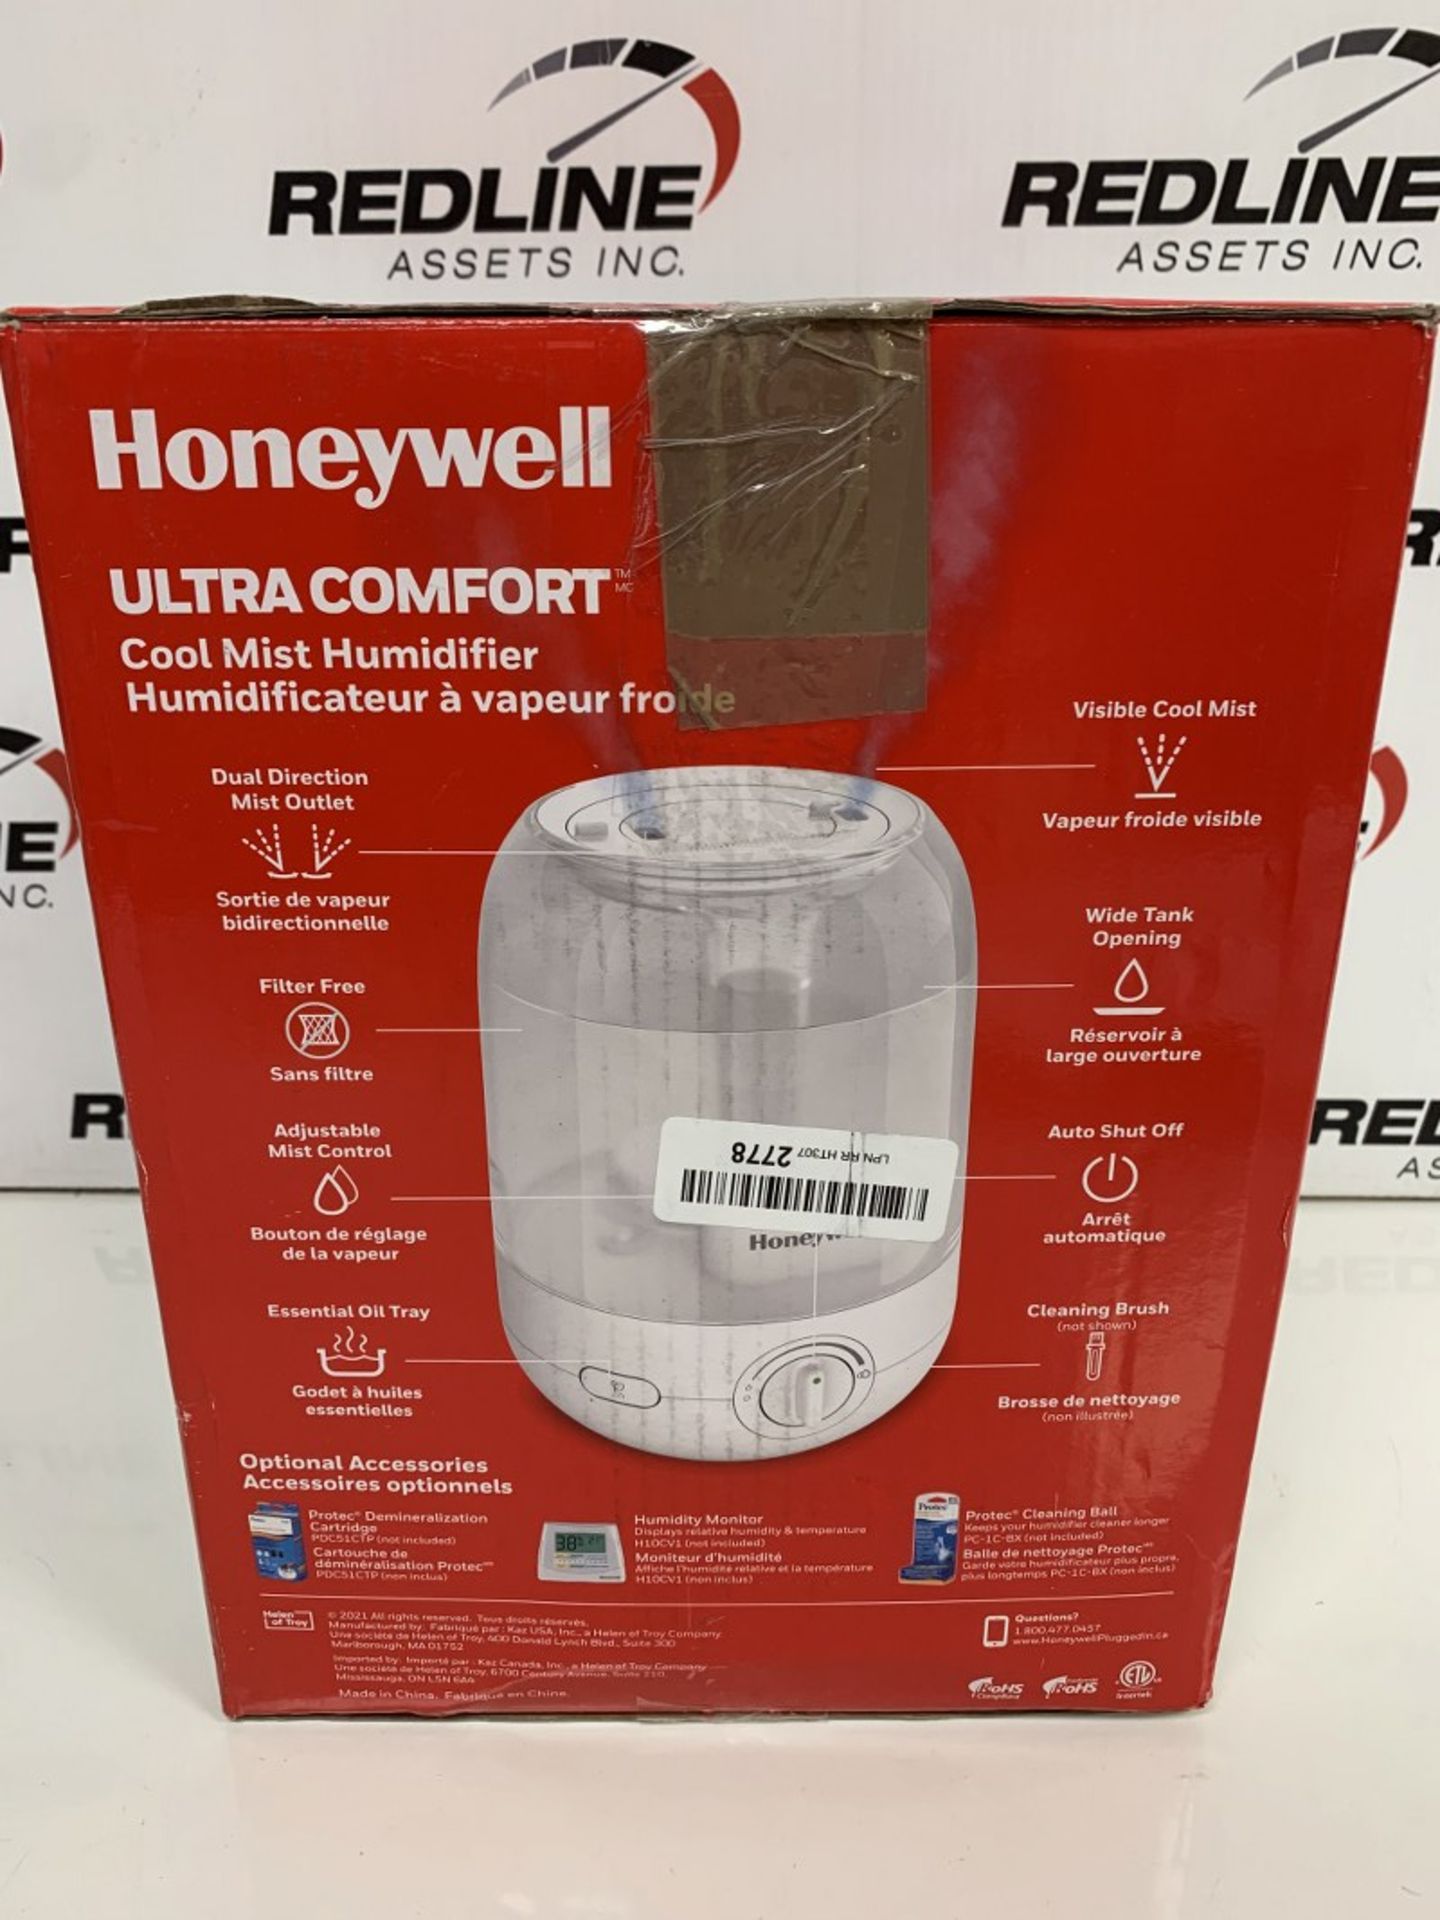 Honeywell - Cool Mist Humidifier - Image 2 of 2